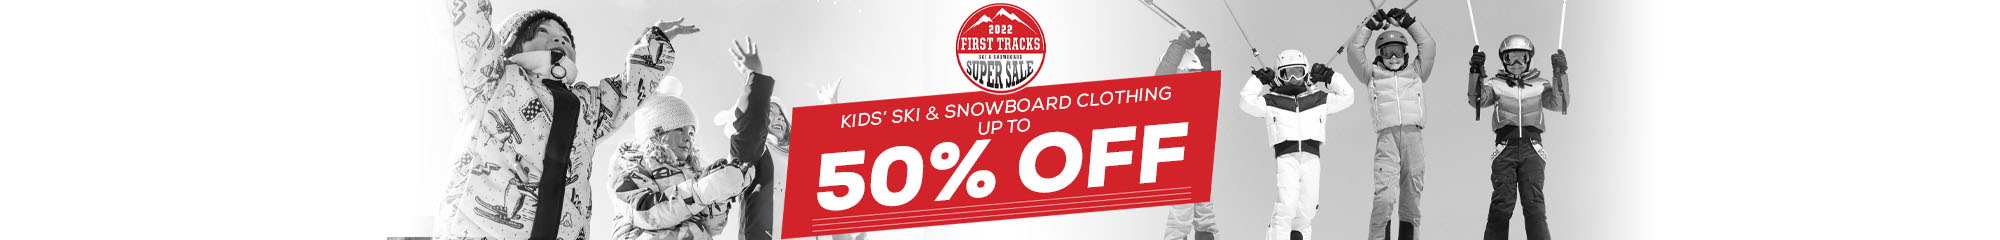 2022 First Tracks Ski & Snowboard Super Sale. Kids' Ski & Snowboard clothing up to 50% Off. 